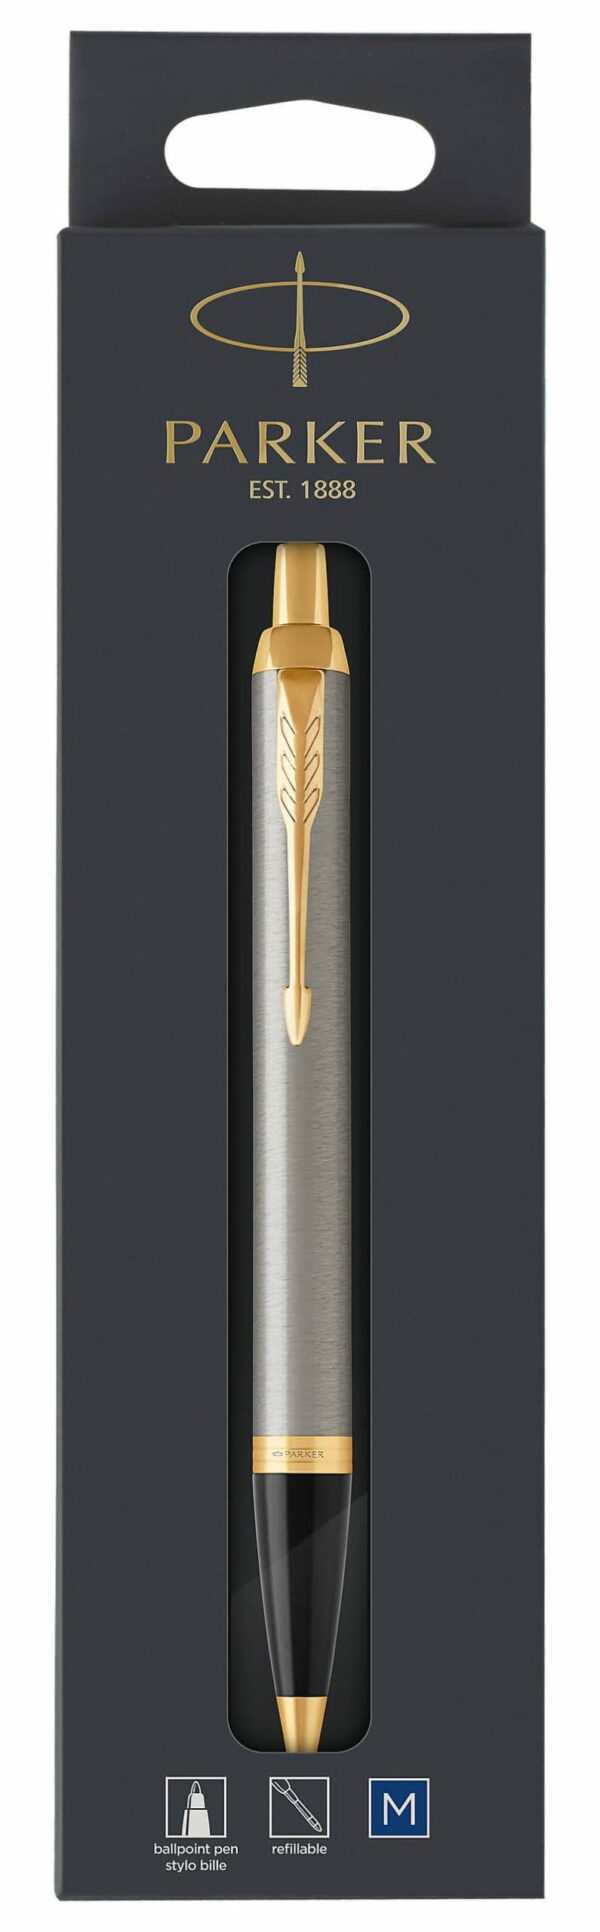 PARKER IM Ball Pen Medium Nib Blue Ink Hangsell - Brushed Metal Gold TrIm